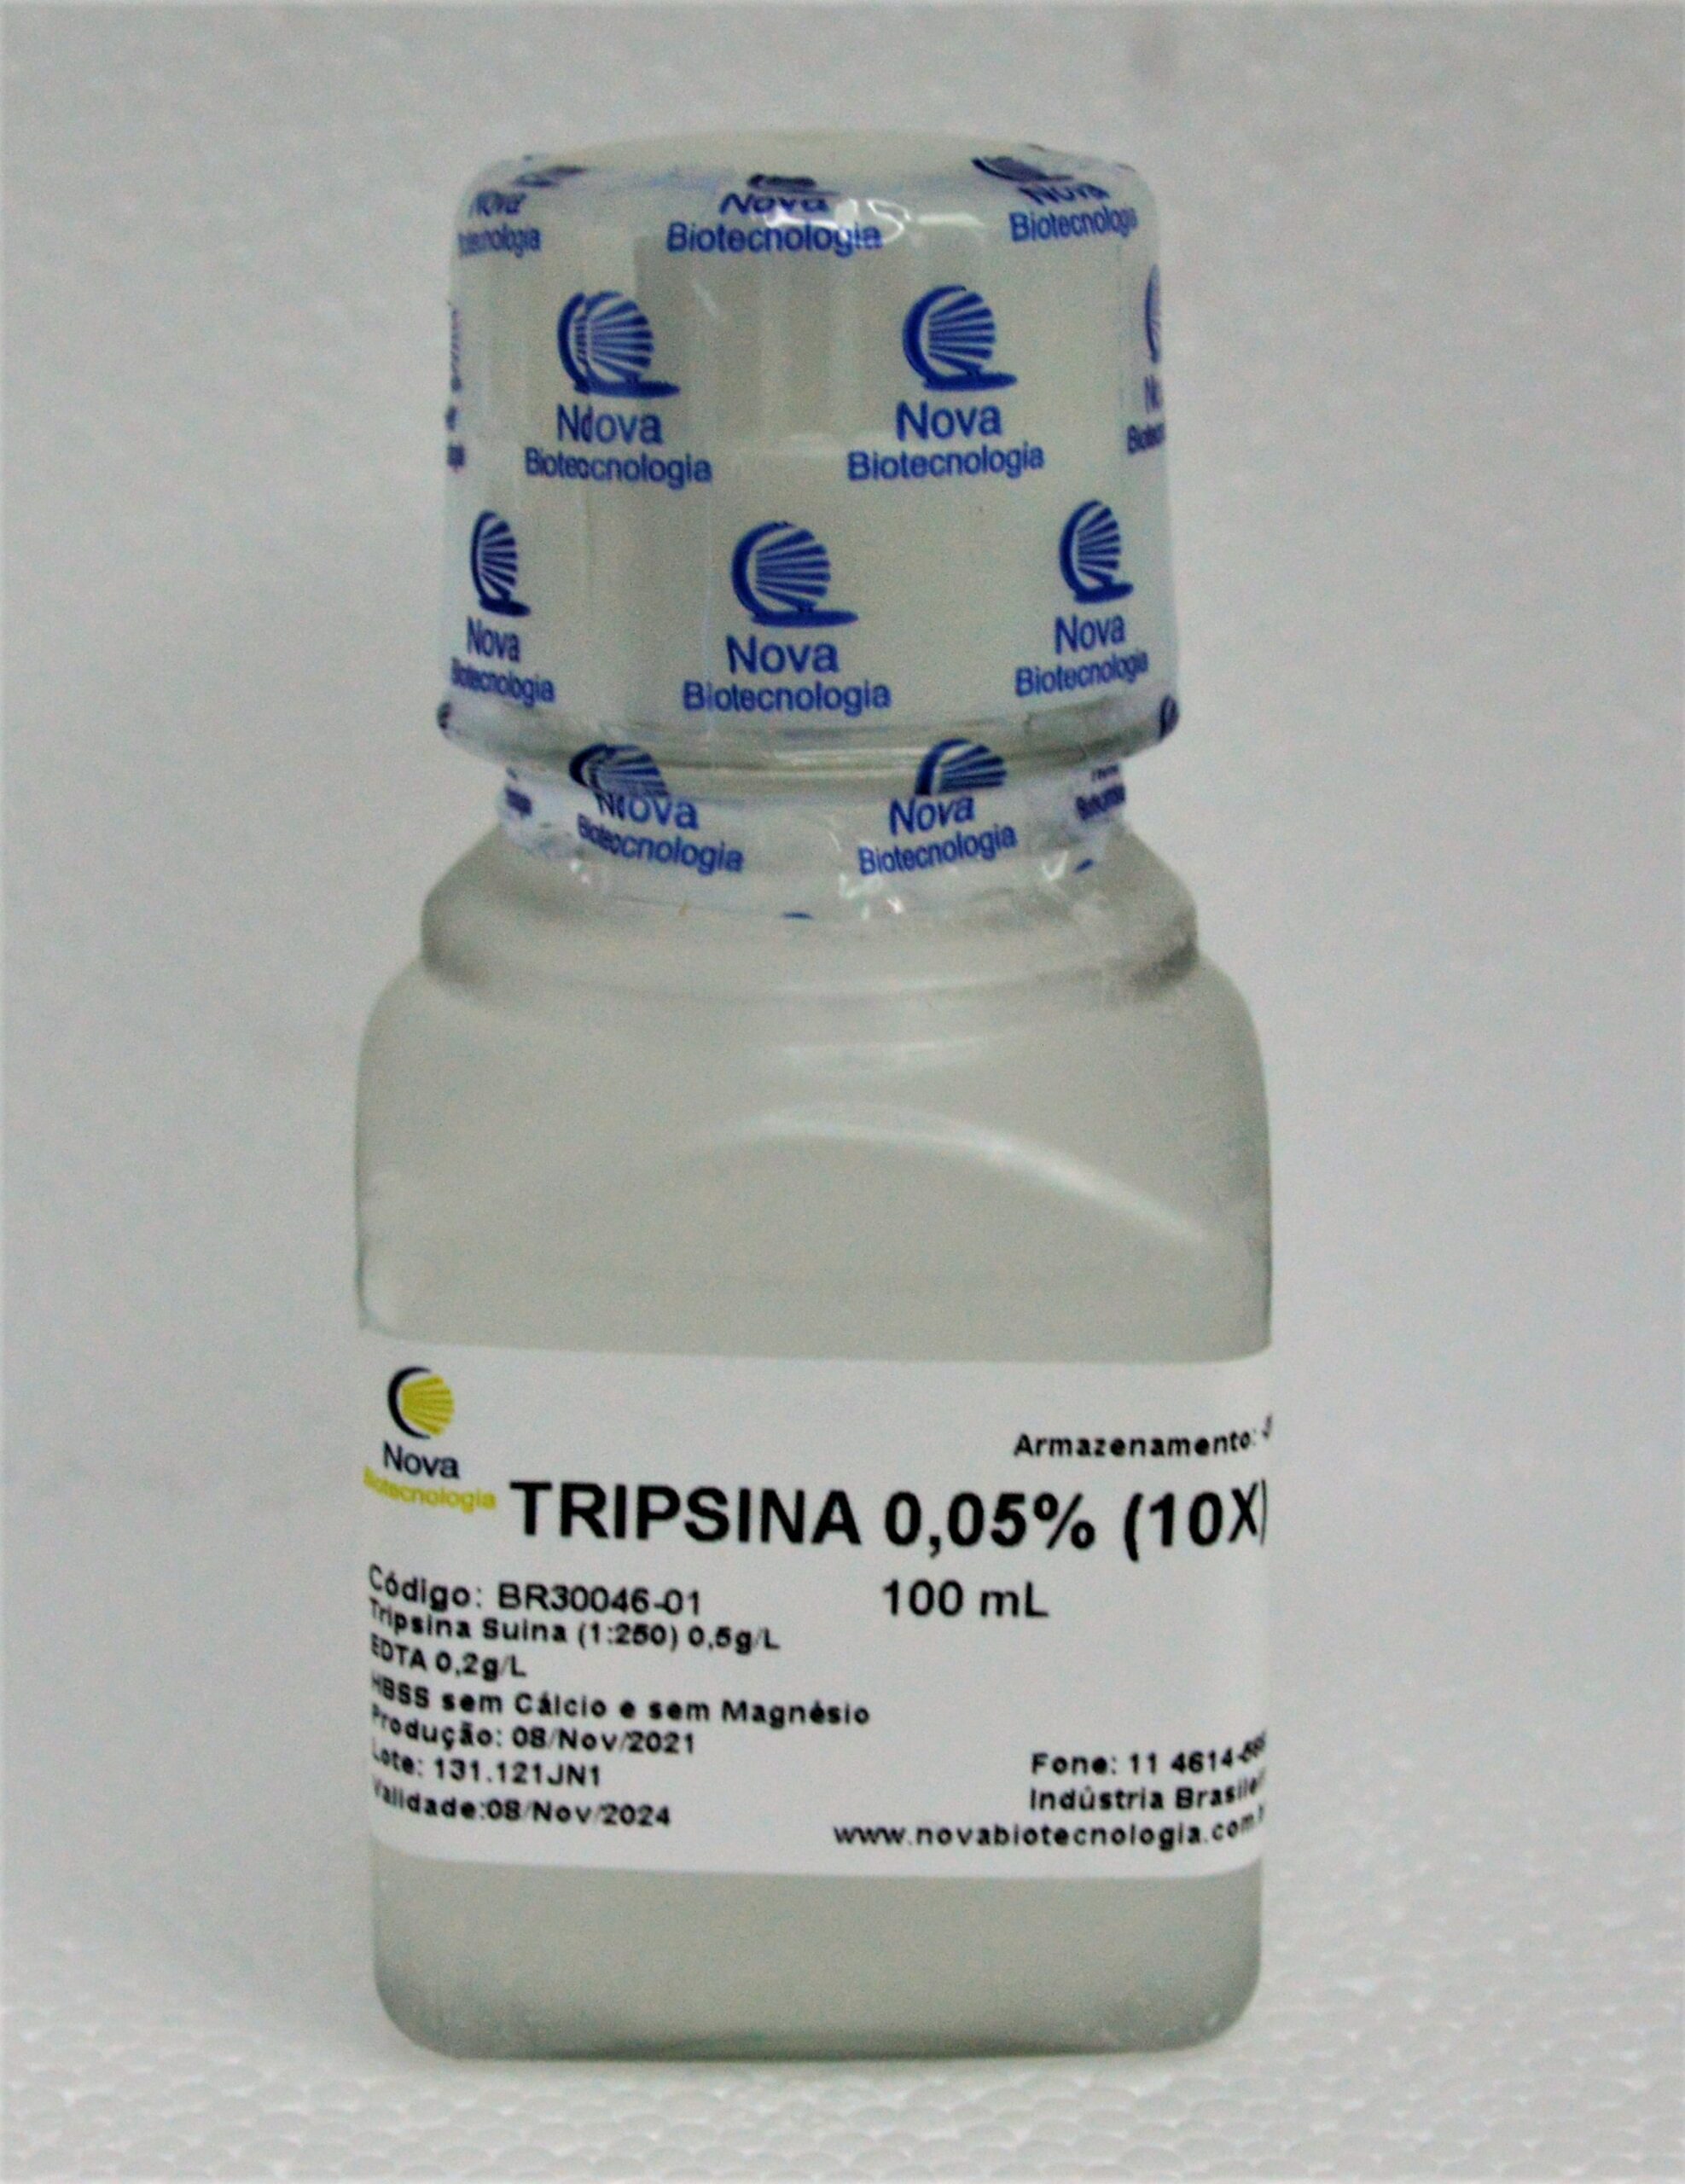 Tripsina 0,05% - 100mL - 10X